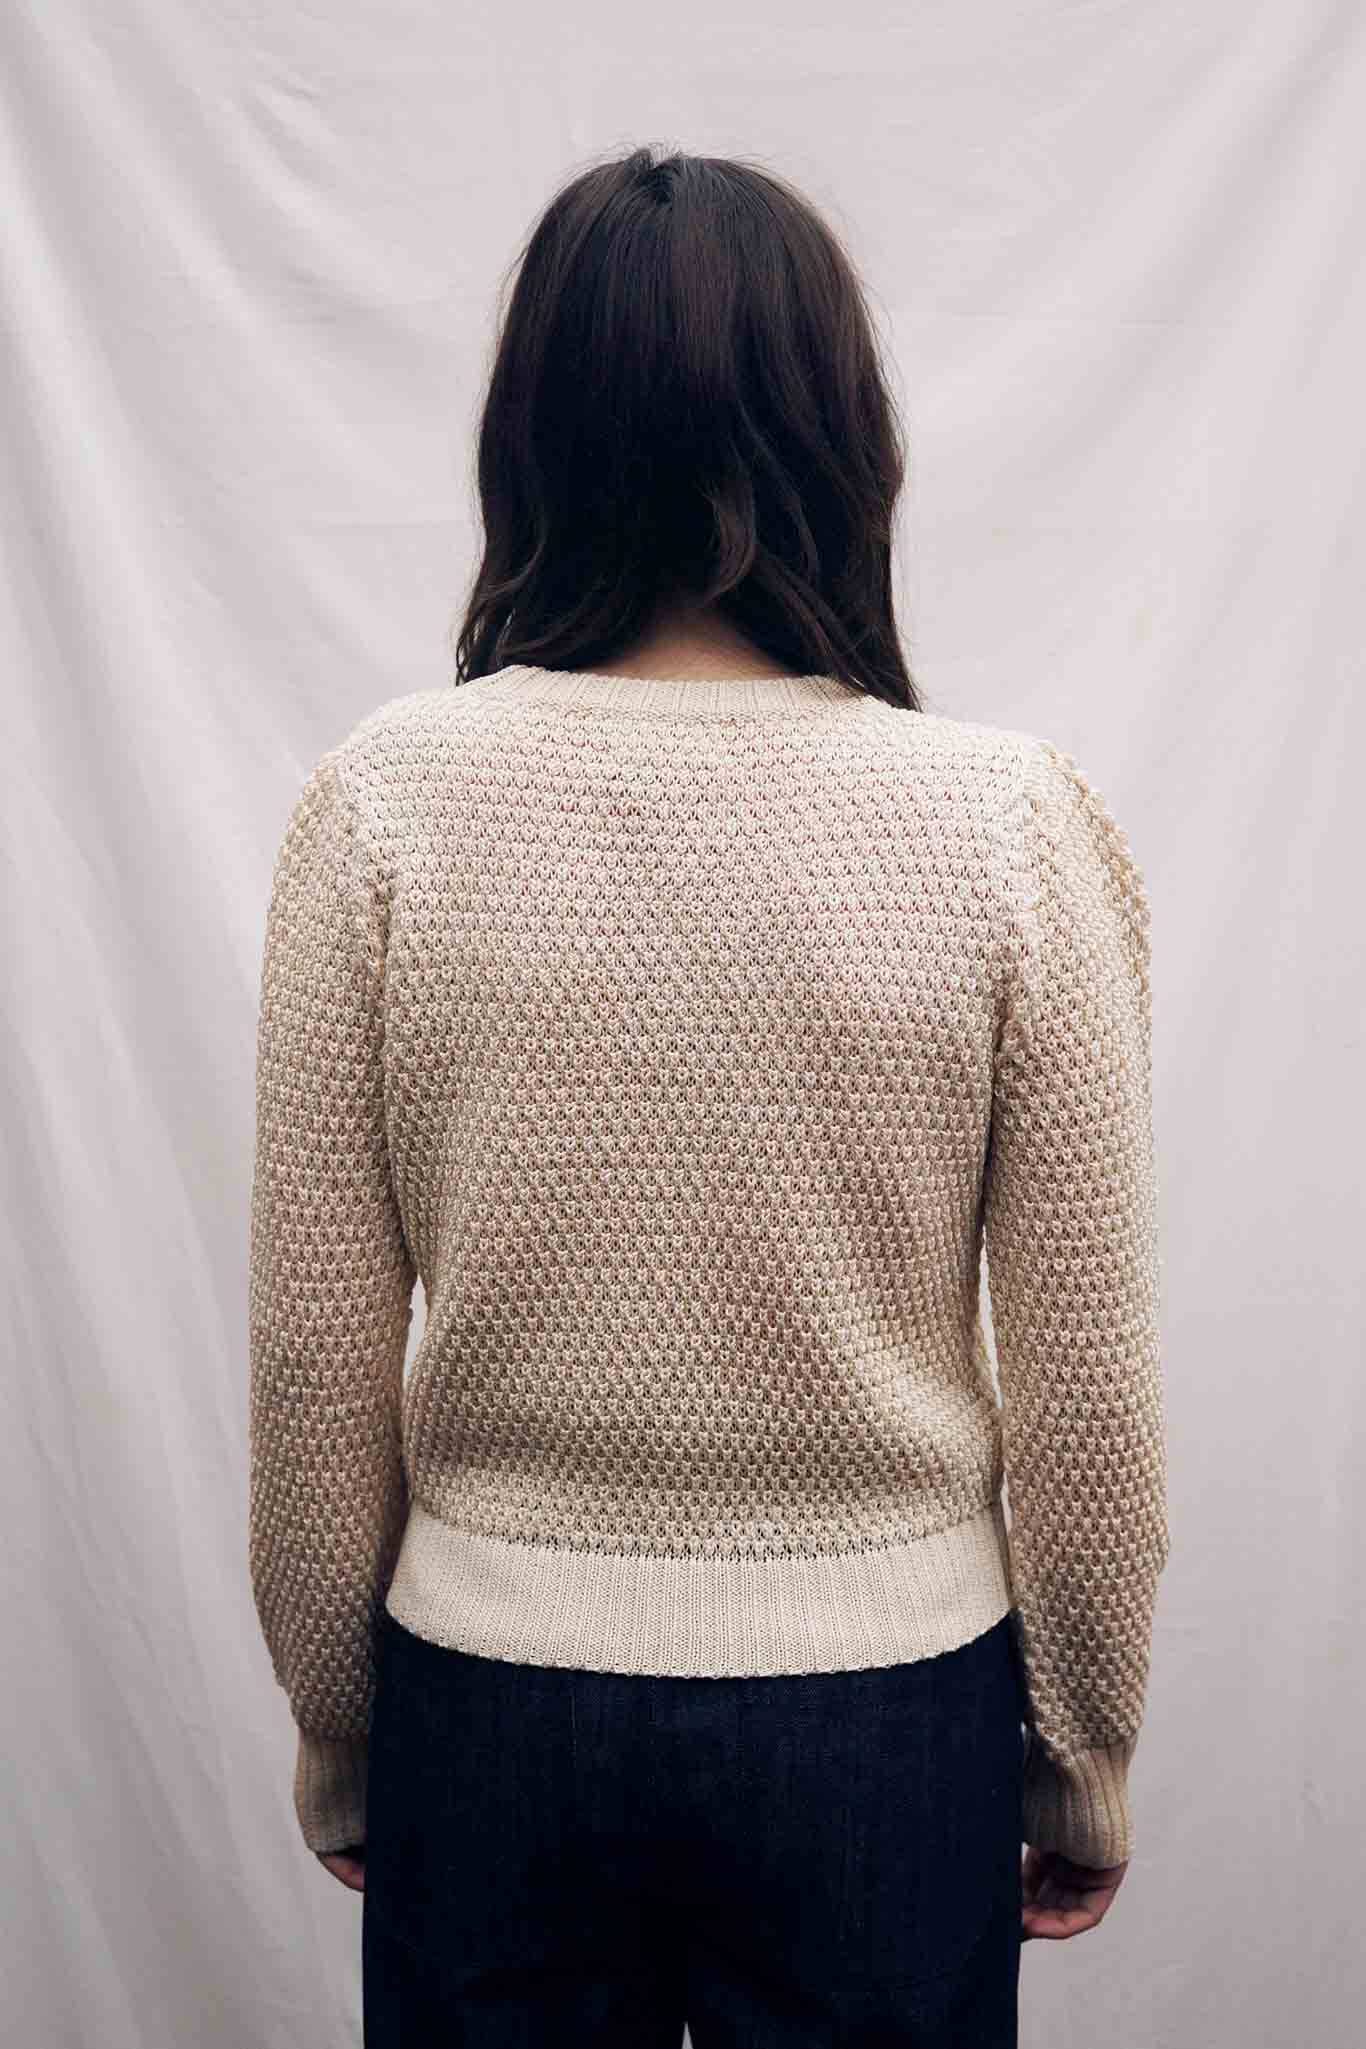 Textural cotton knit crewneck sweater. Made in peru.